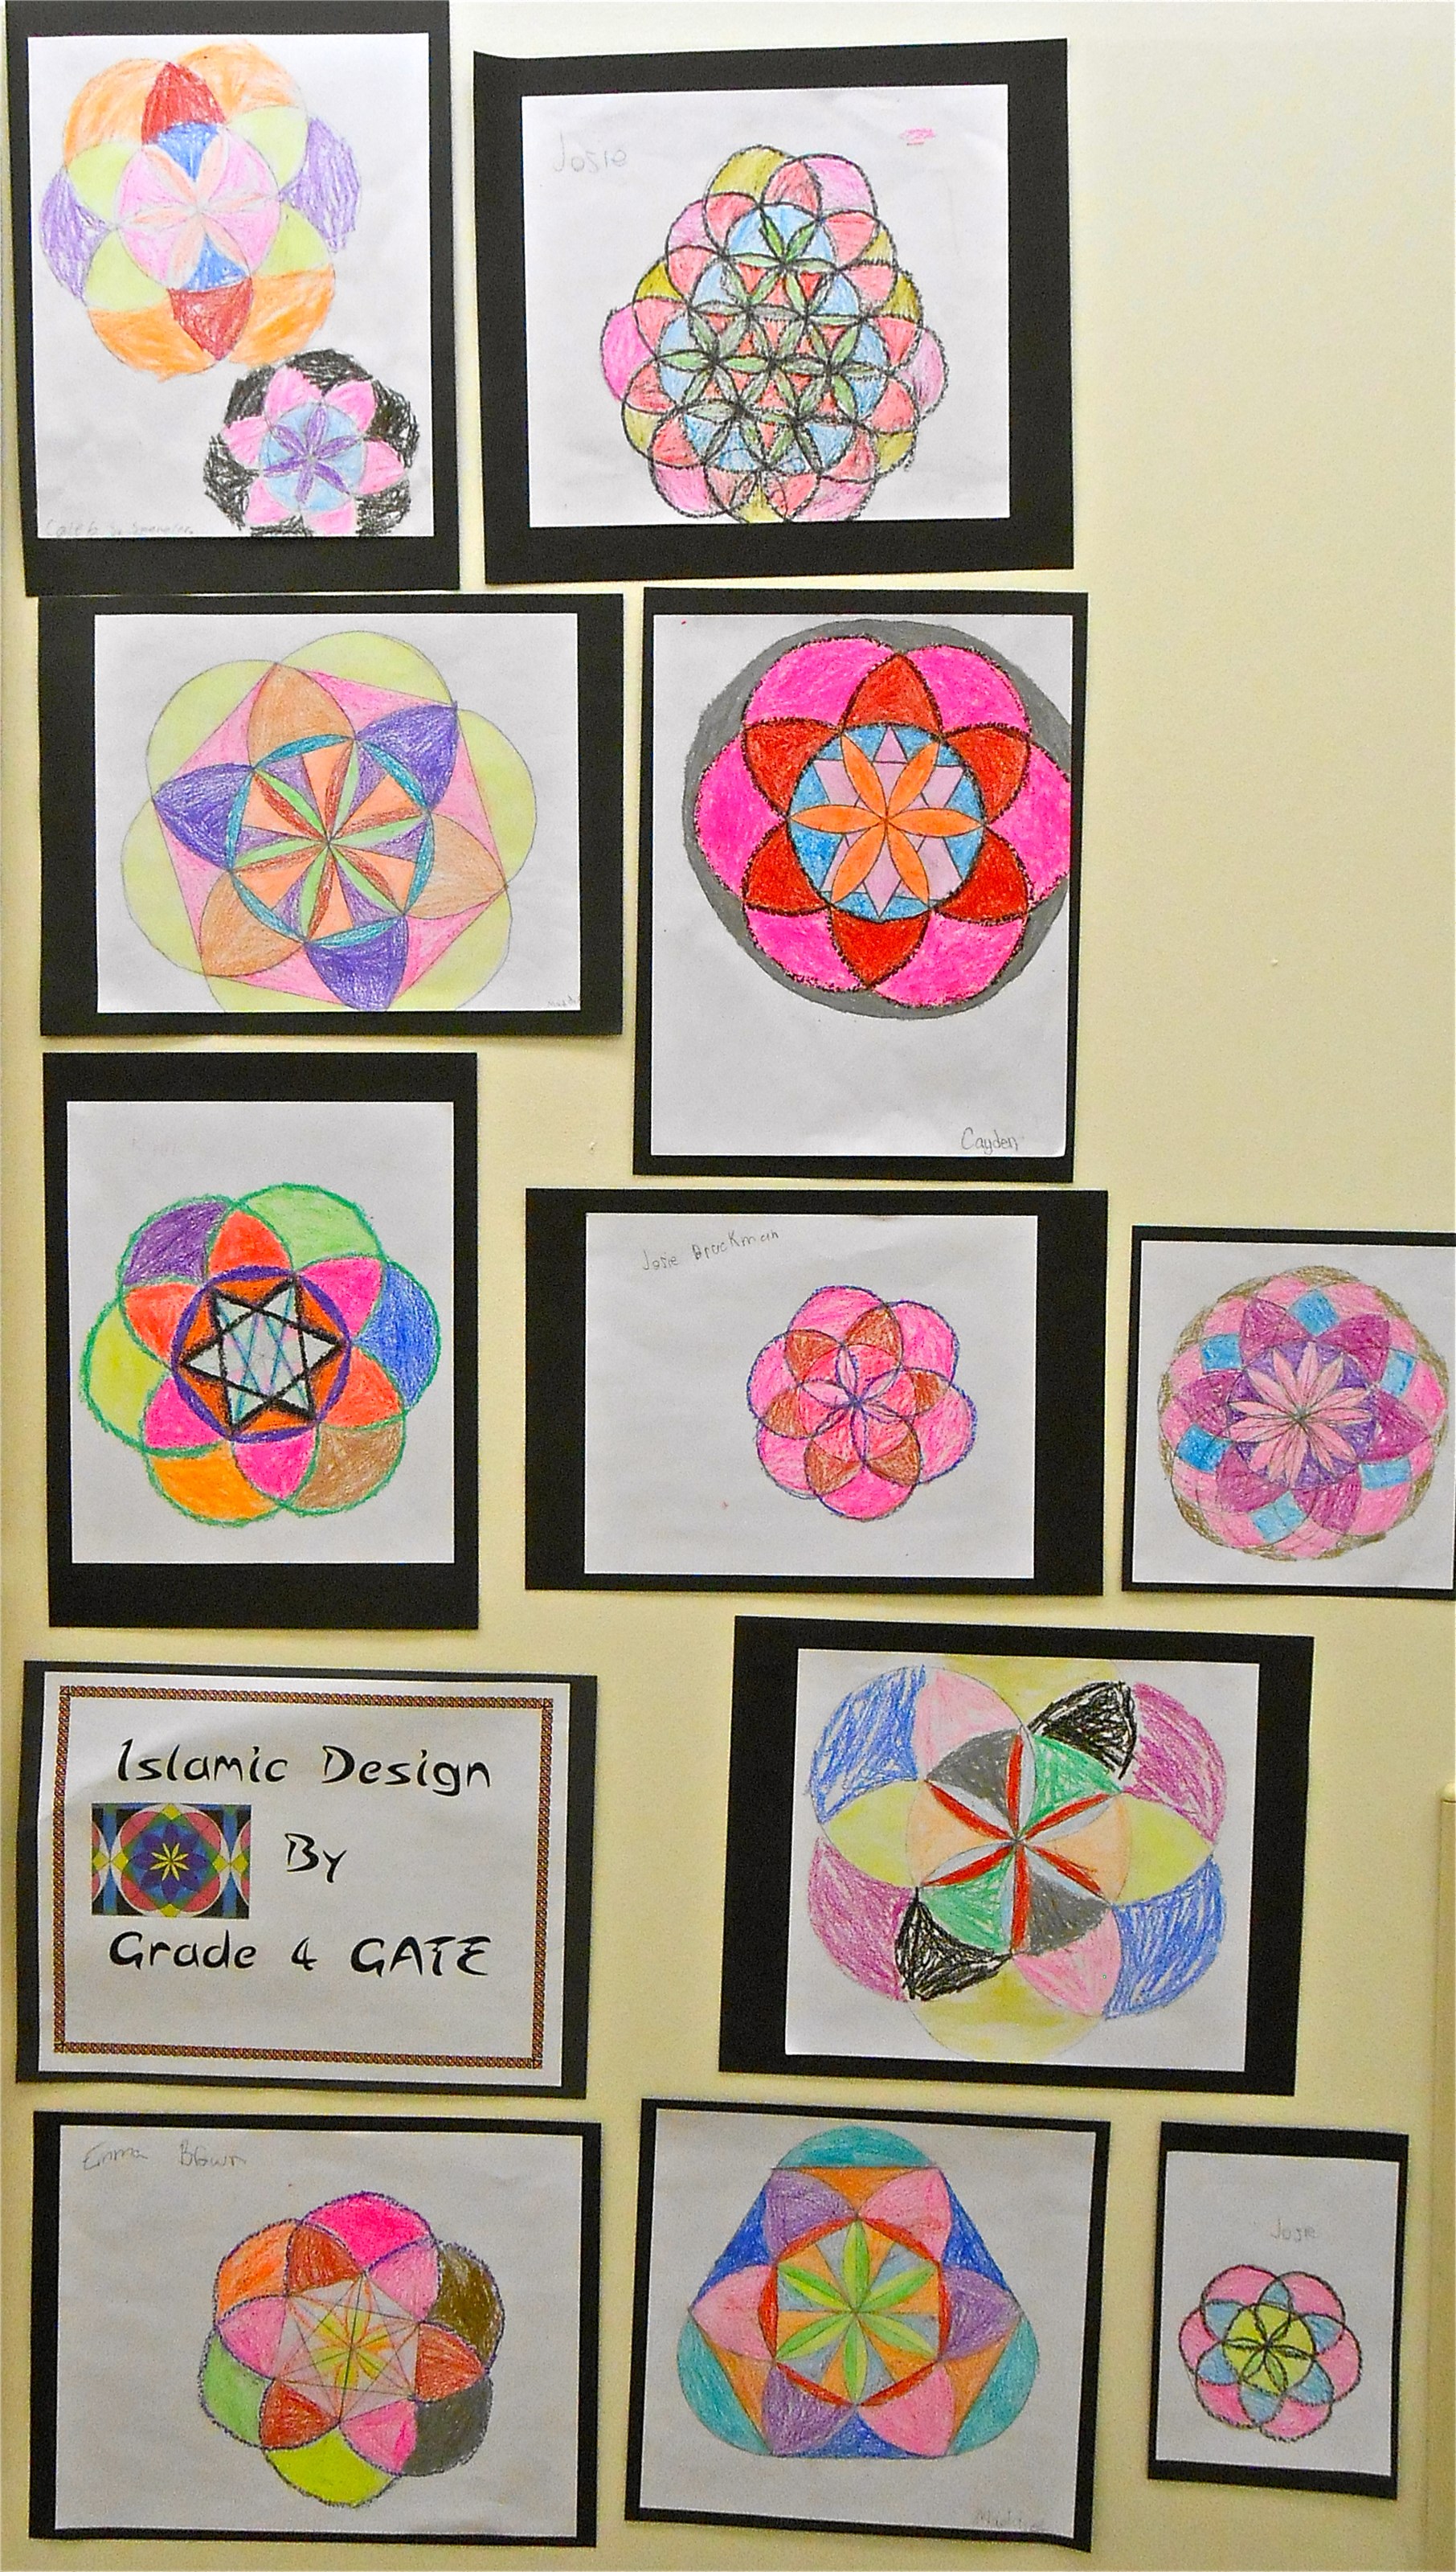 Examples of geometric "Islamic" art